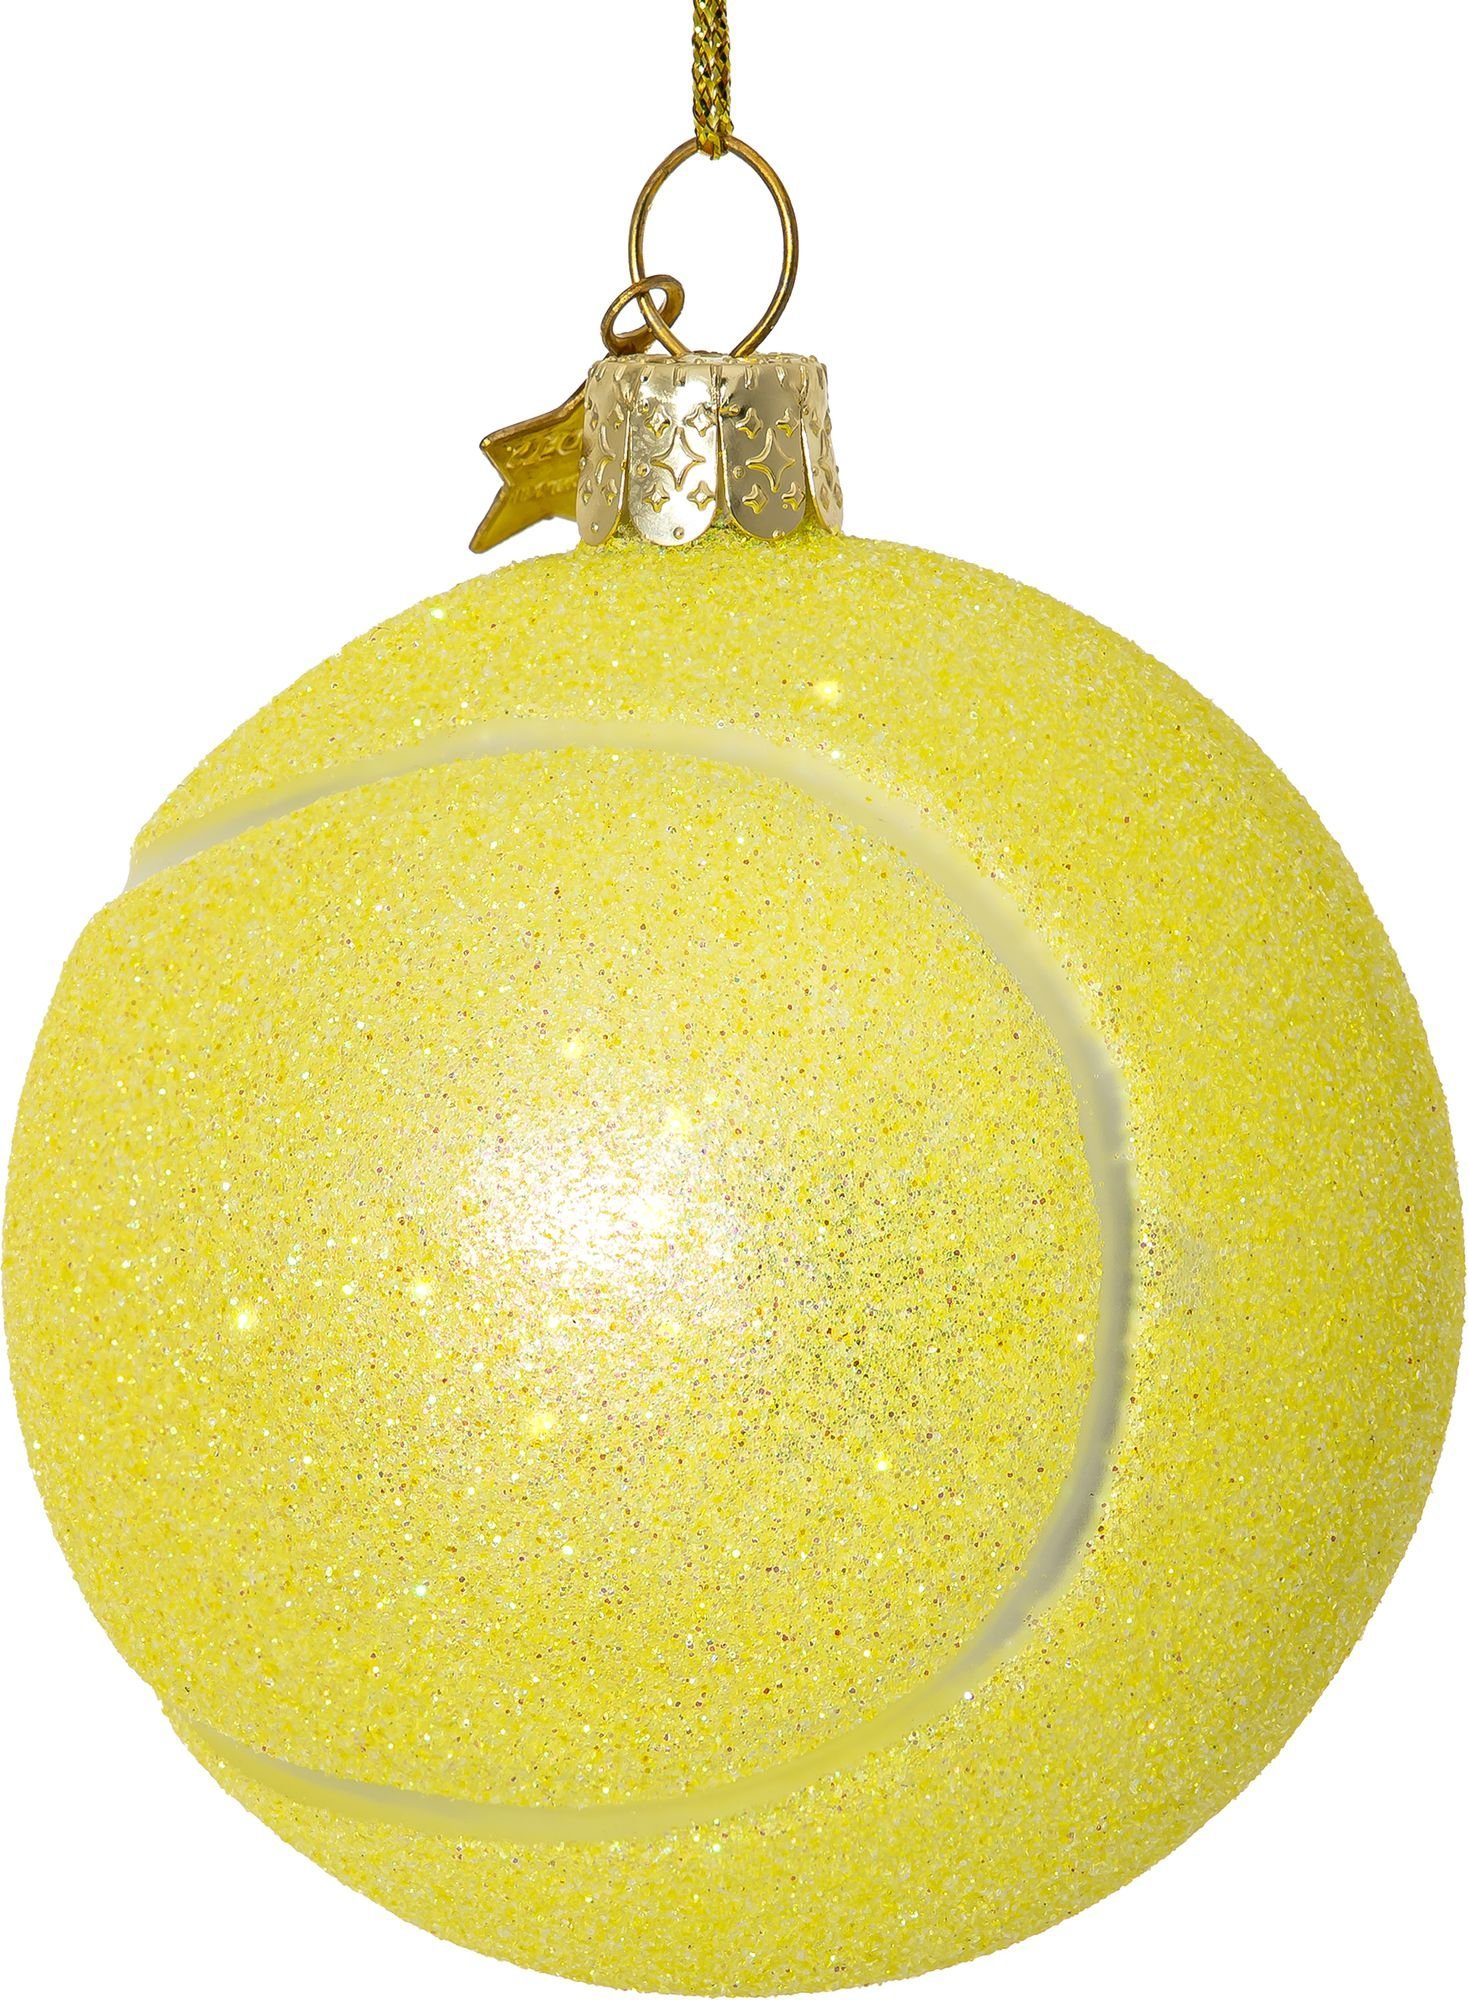 SIKORA Christbaumschmuck BS521 Tennisball Glas Weihnachtsbaum Anhänger Ornament